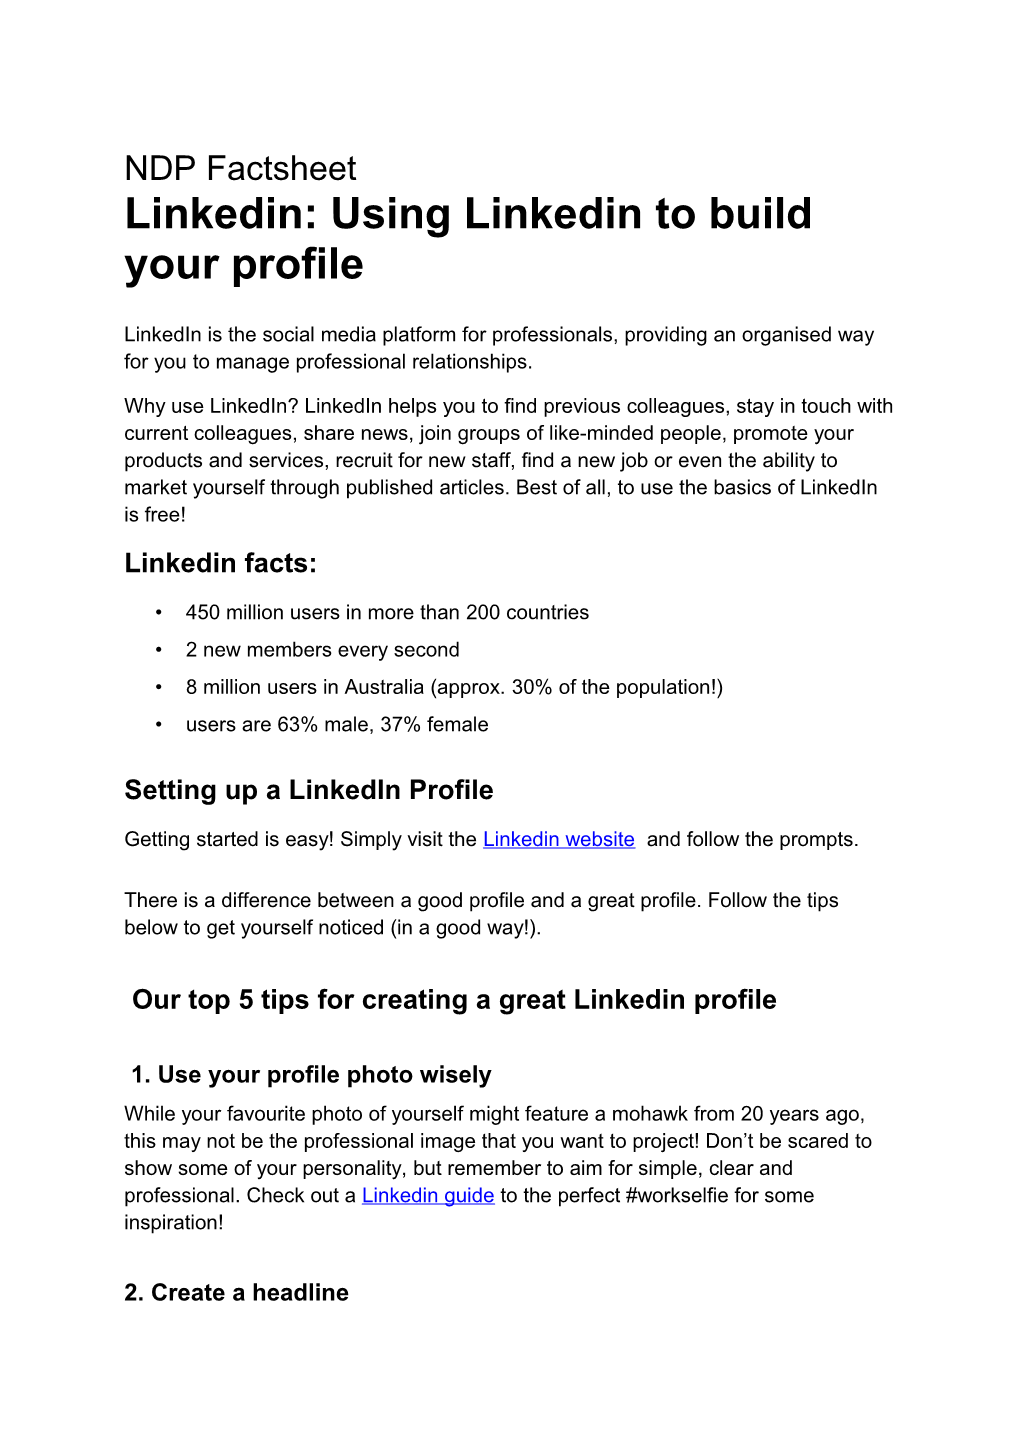 Linkedin: Using Linkedin to Build Your Profile